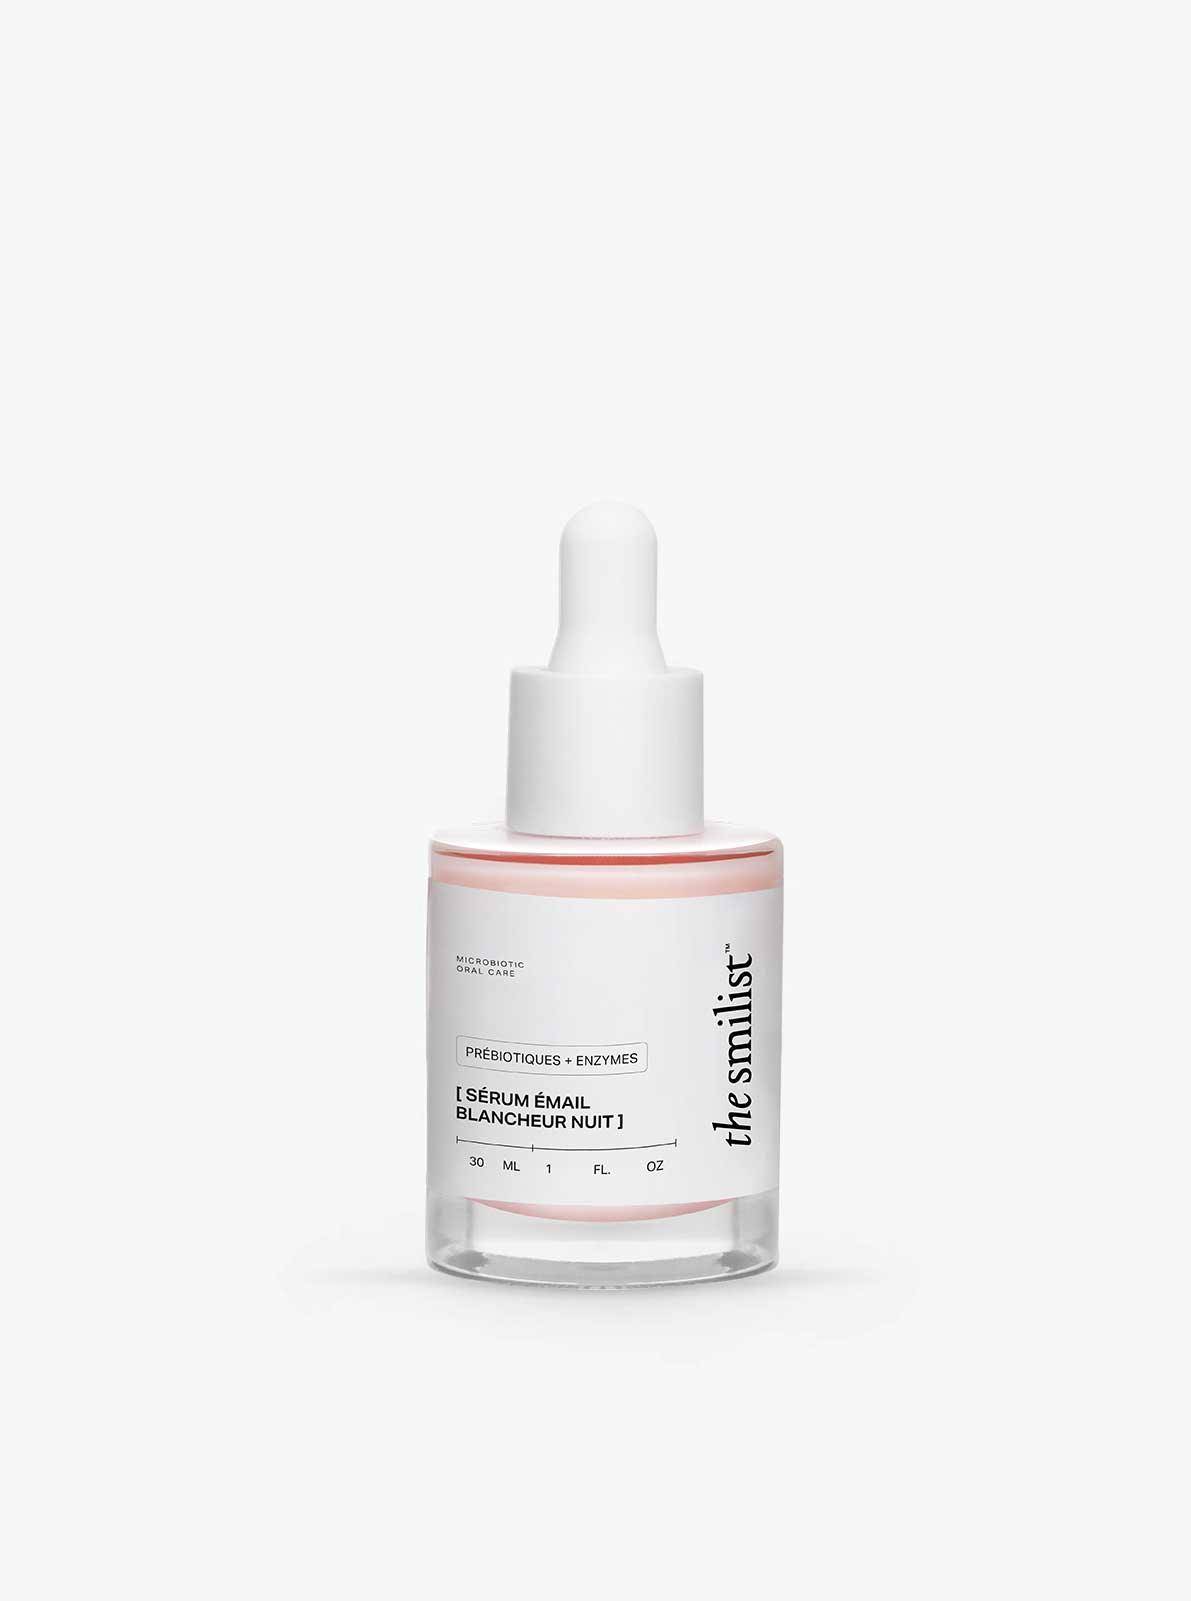 Night whitening enamel serum - The Smilist